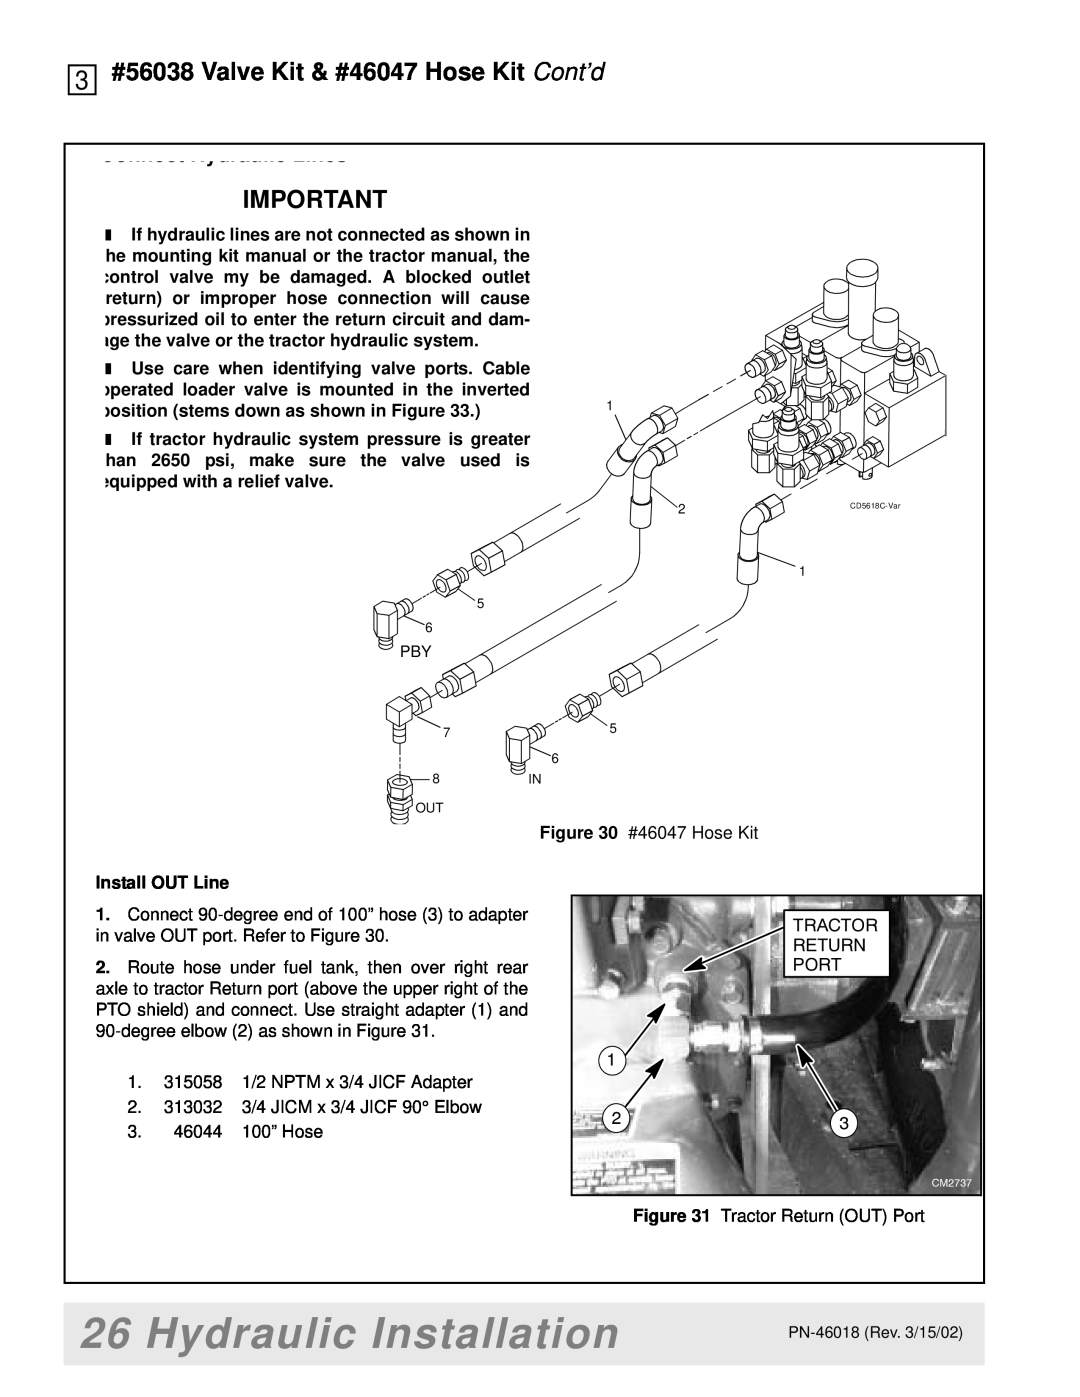 Woods Equipment M8200 manual Hydraulic Installation, #56038 Valve Kit & #46047 Hose Kit Cont’d 